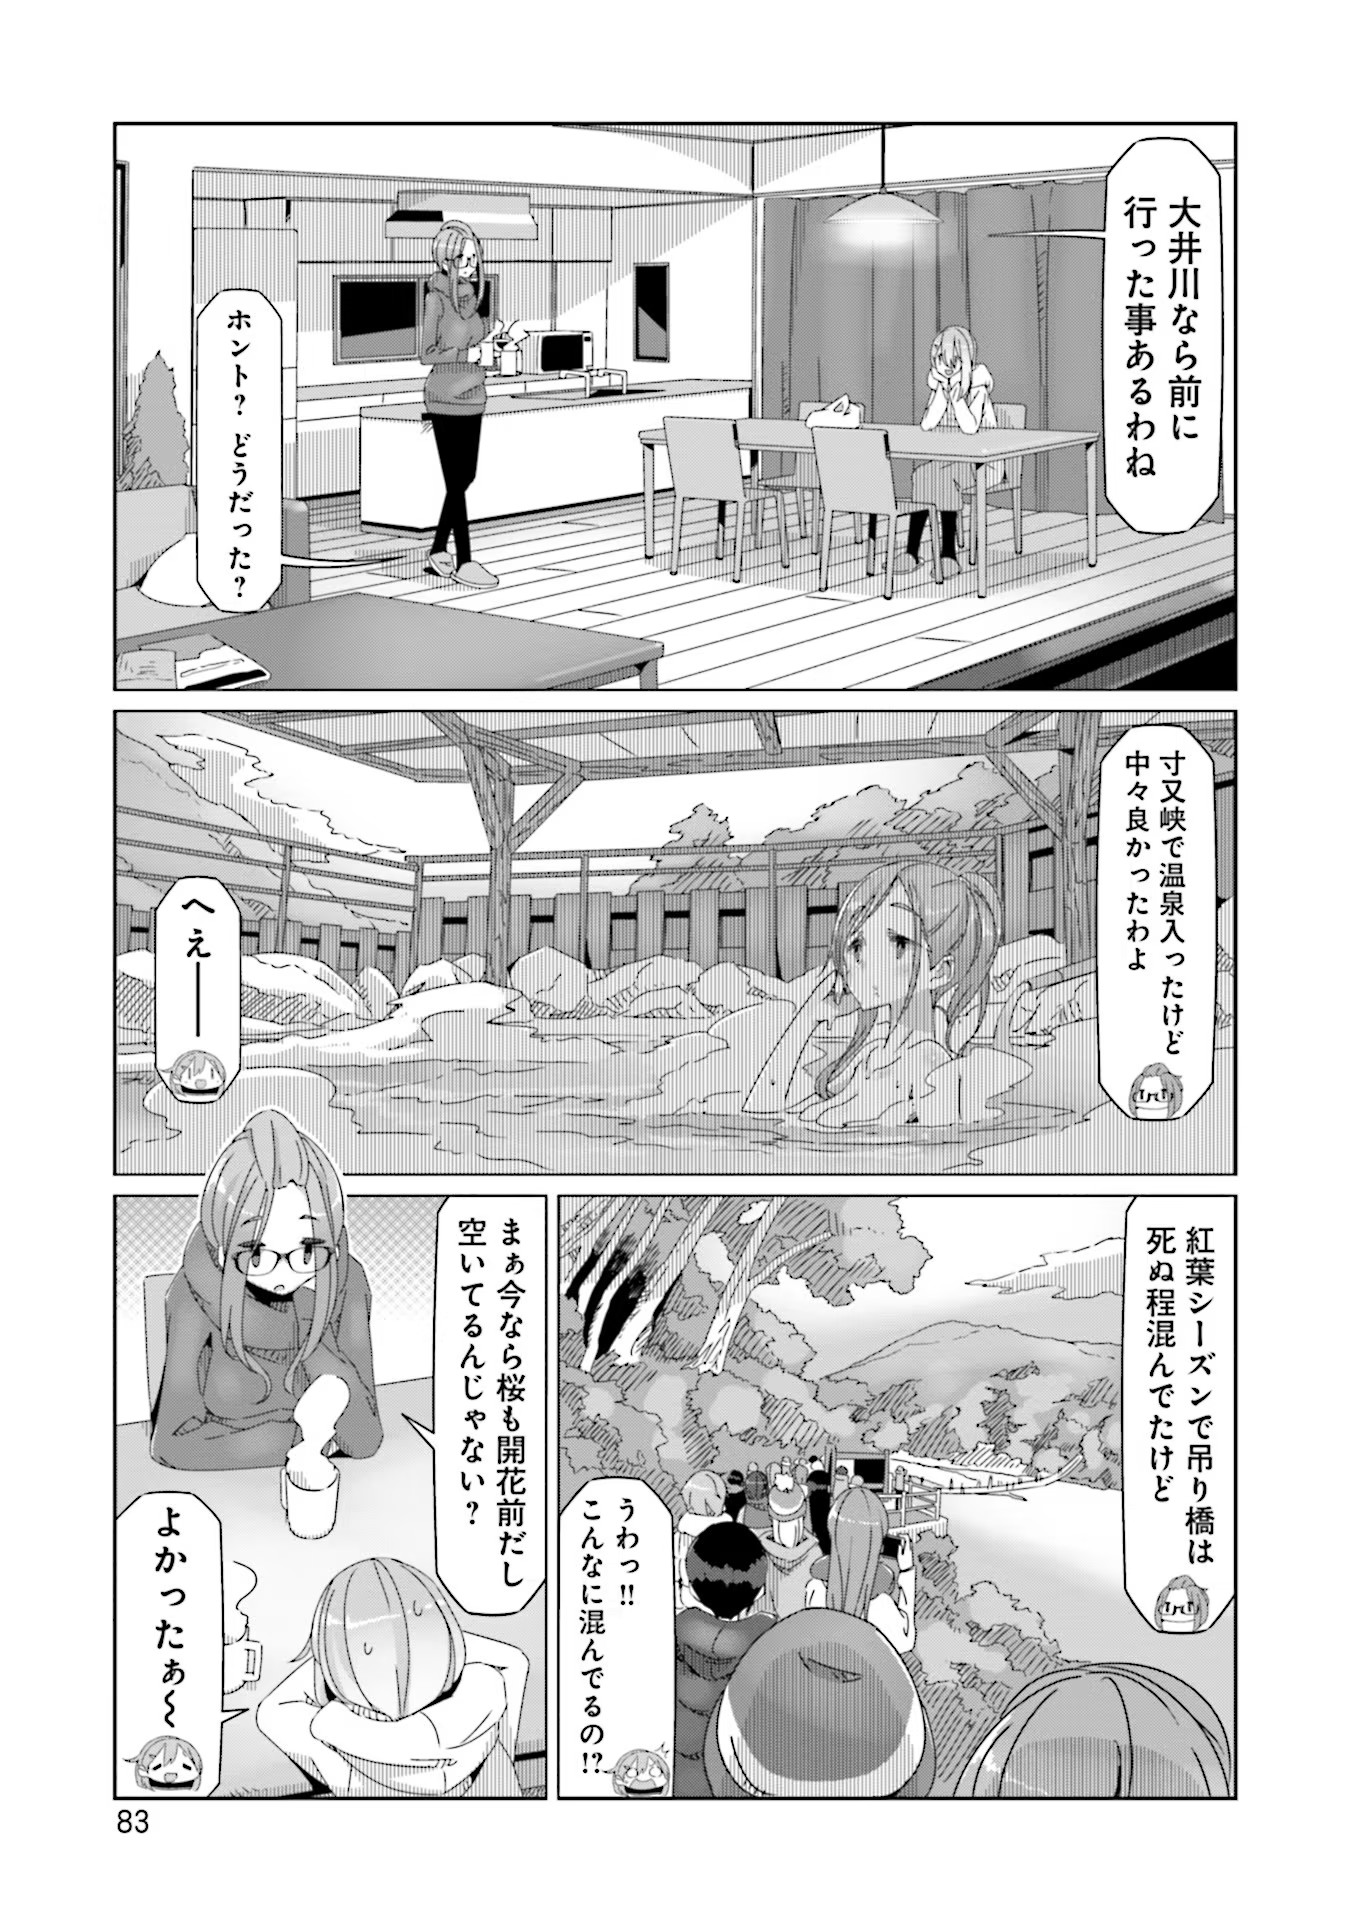 Yuru Camp - Chapter 56 - Page 3